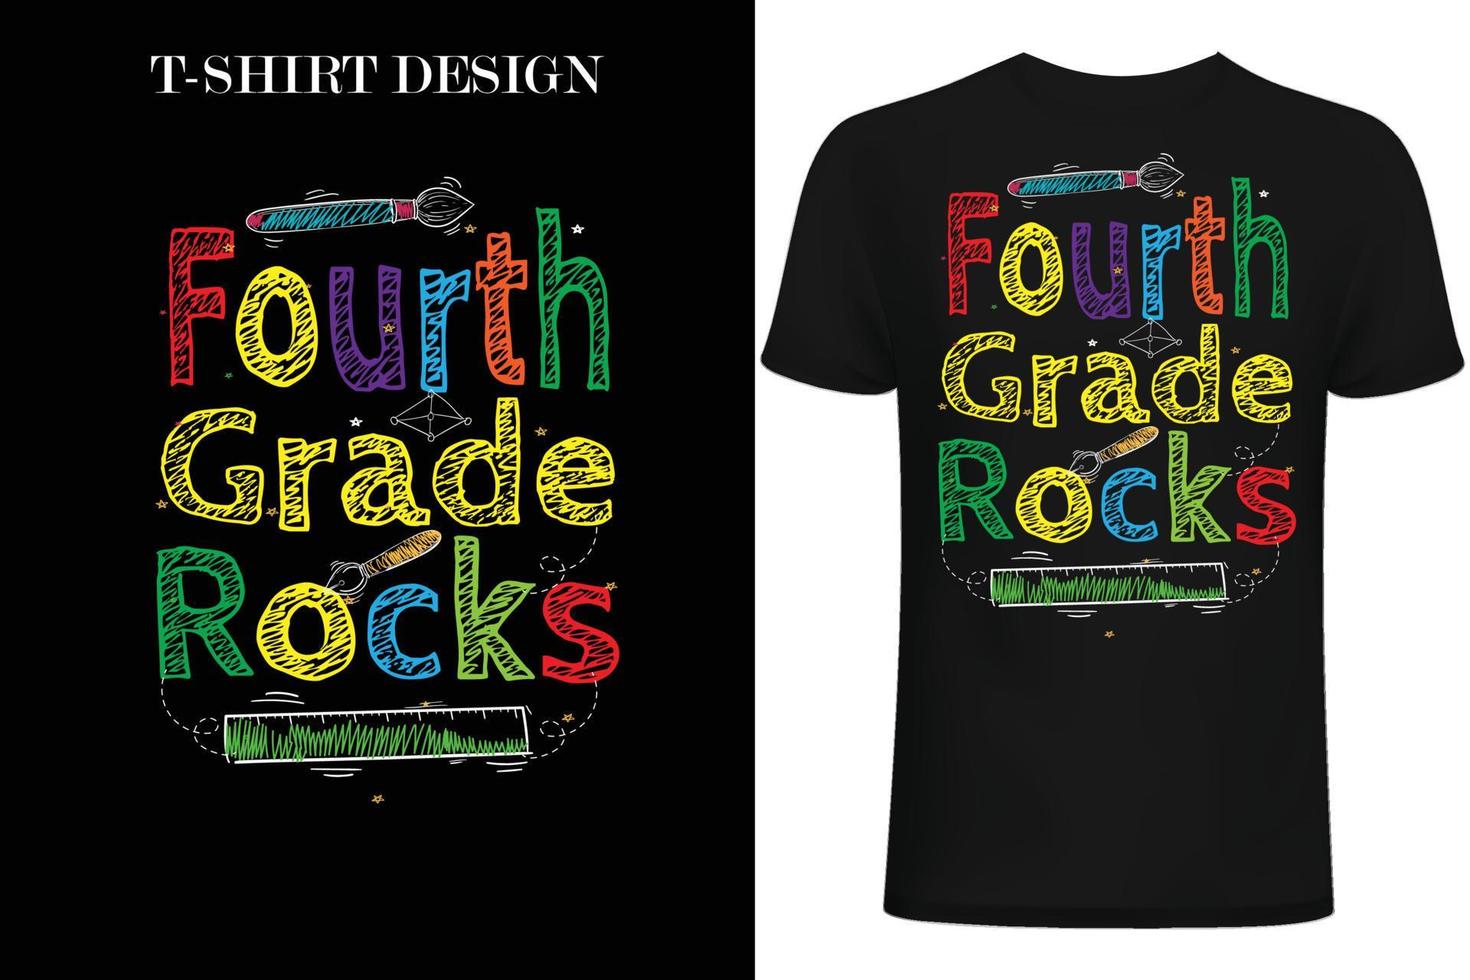 fourth Grade rock t-shirt design.1st day at school t-shirt design. vector